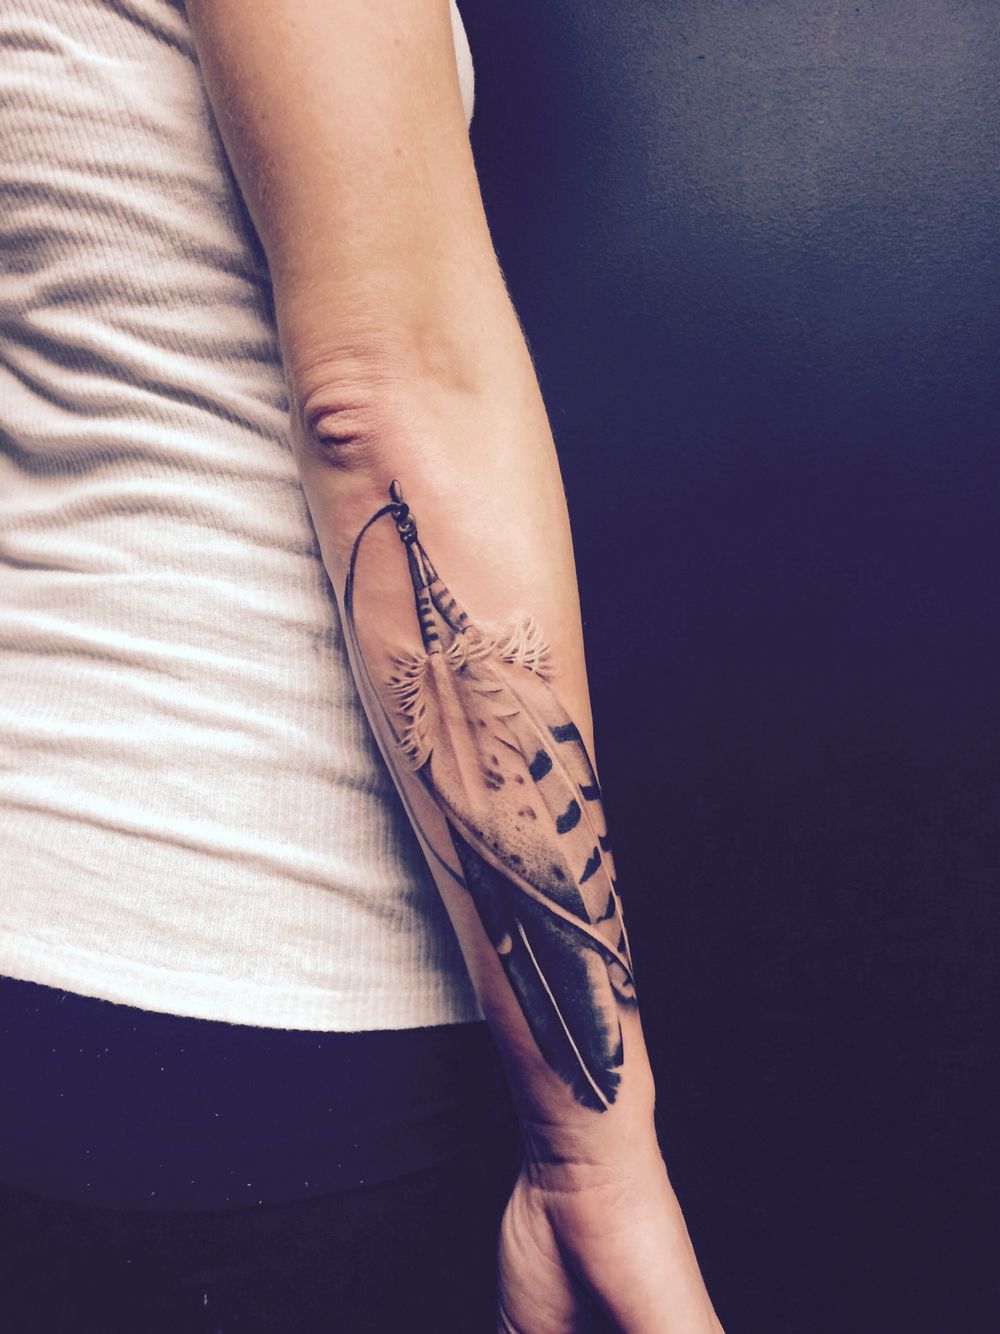 Arm Feather Tattoo - Best Feather Tattoos - Best Tattoos - MomCanvas